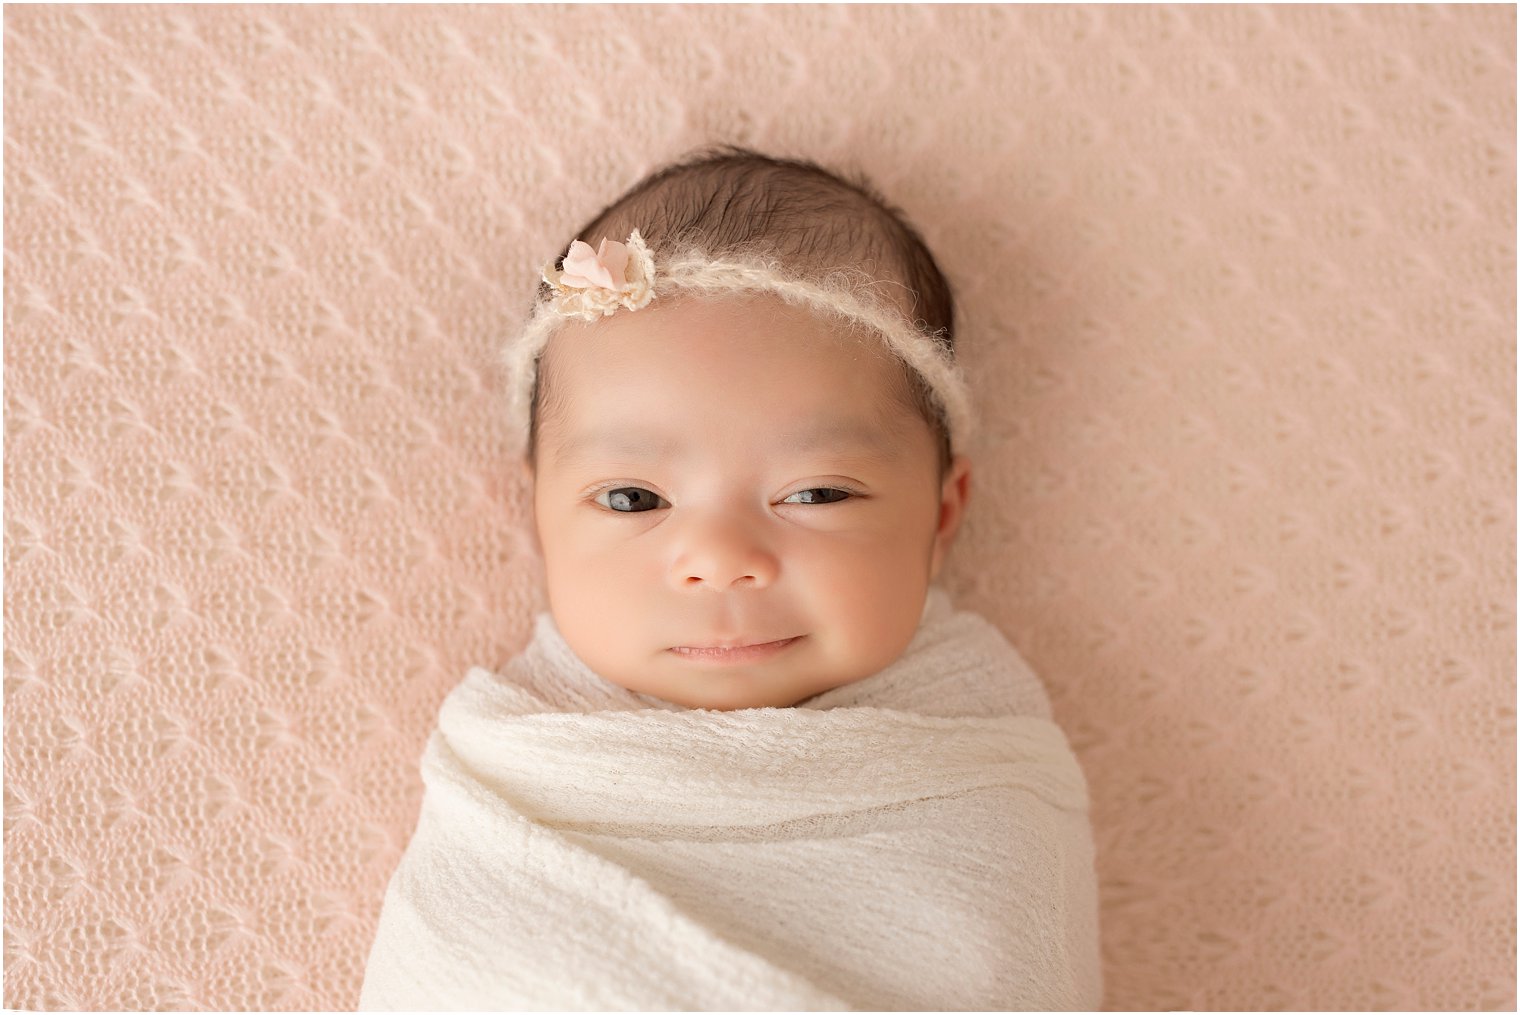 Cute newborn photo of baby with open eyes | Photo by Idalia Photography